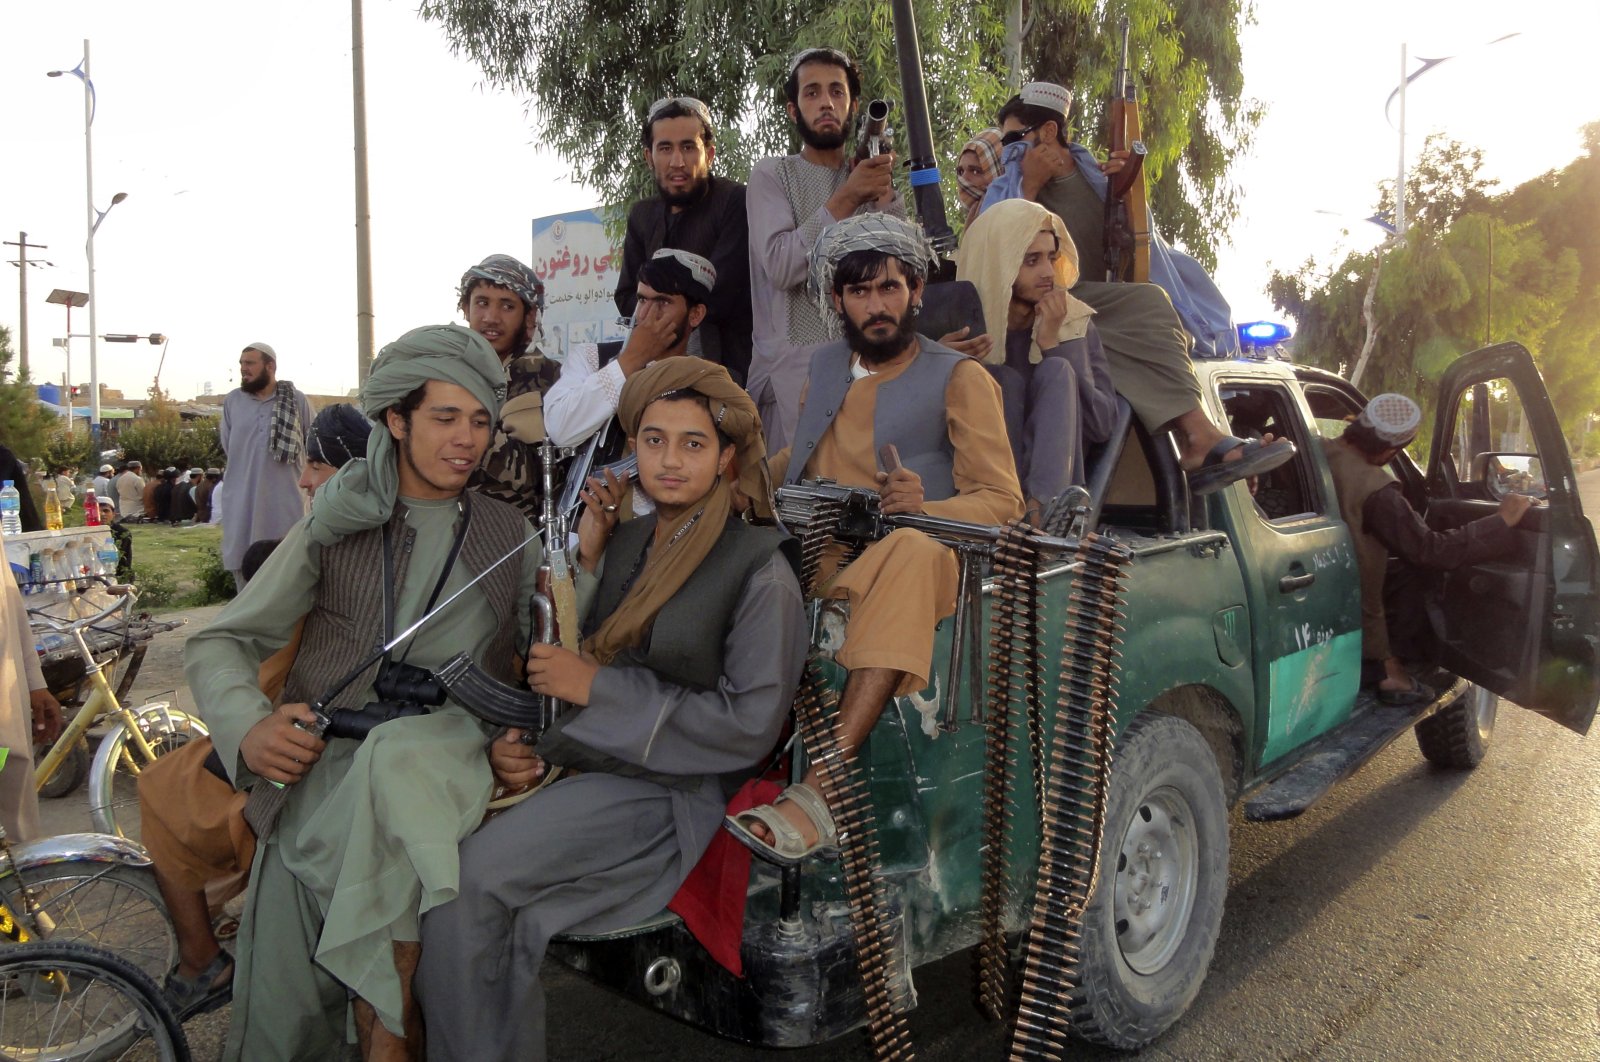 Taliban fighters patrol inside the city of Kandahar, Afghanistan, Aug. 15, 2021. (AP Photo)